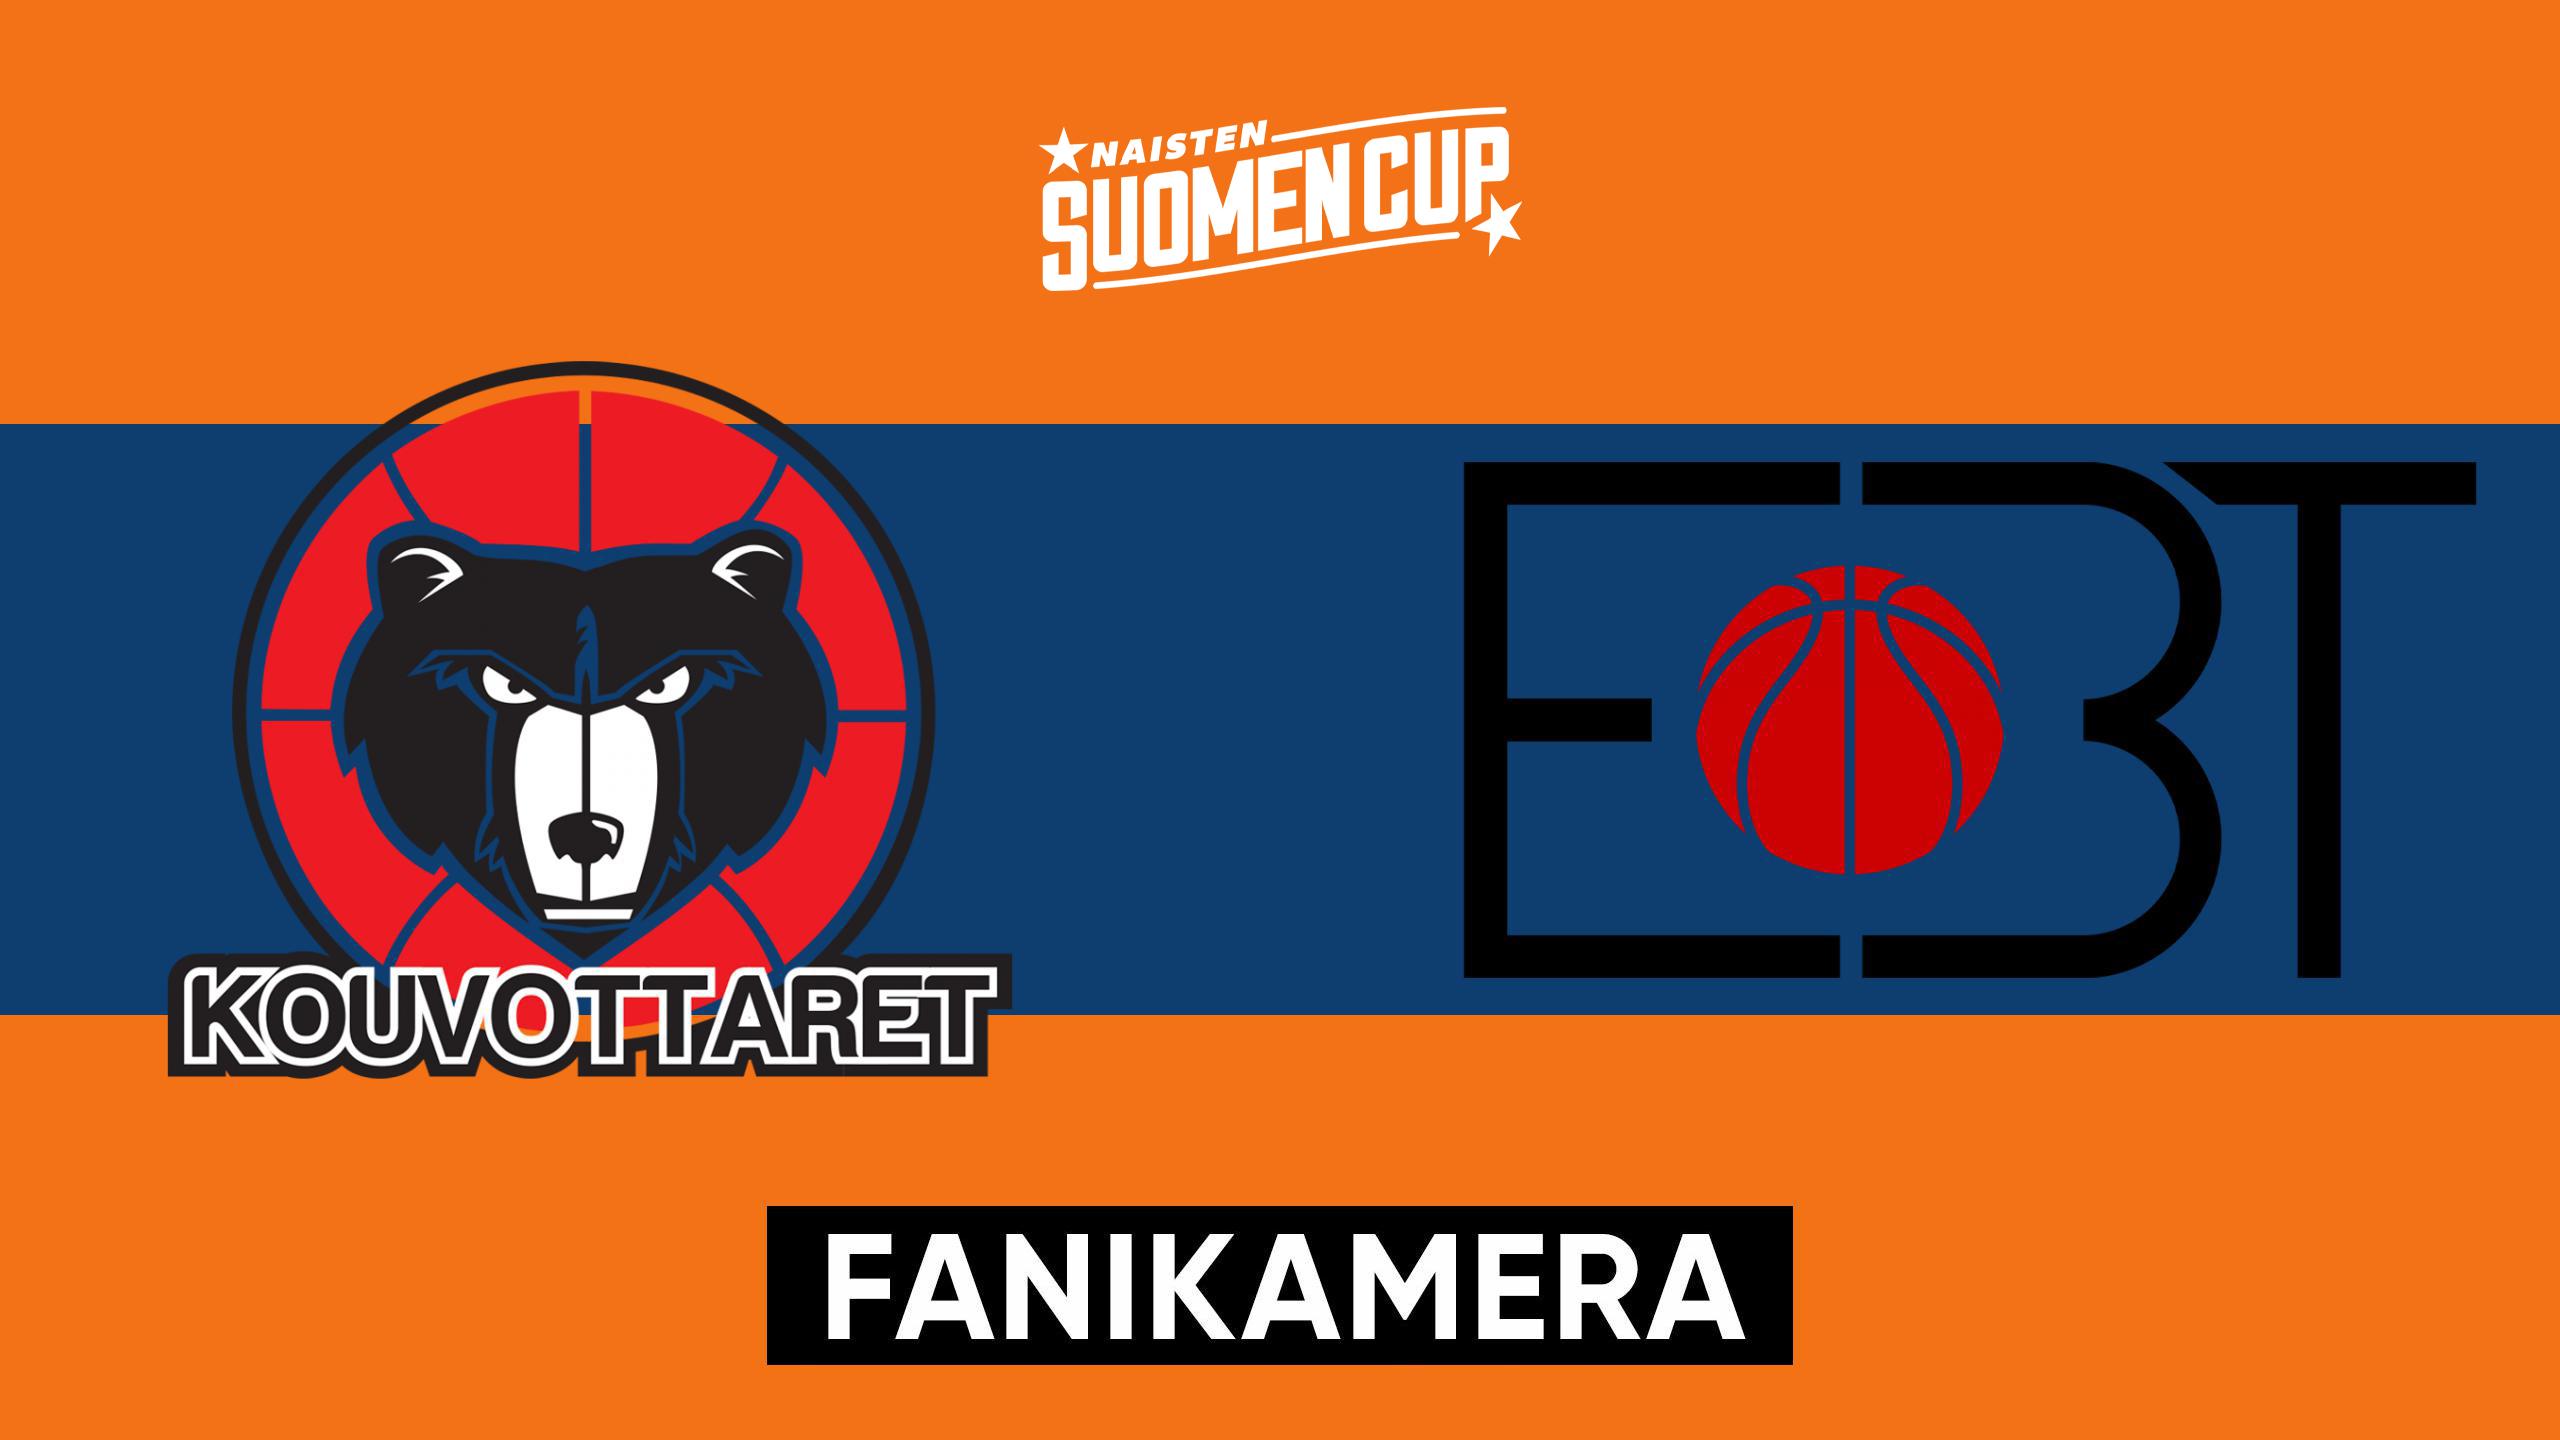 Korisliiga - Kausi 2020 - Jakso 154 - Suomen Cup: Kouvottaret - Espoo  Basket Team, Fanikamera . | Ruutu